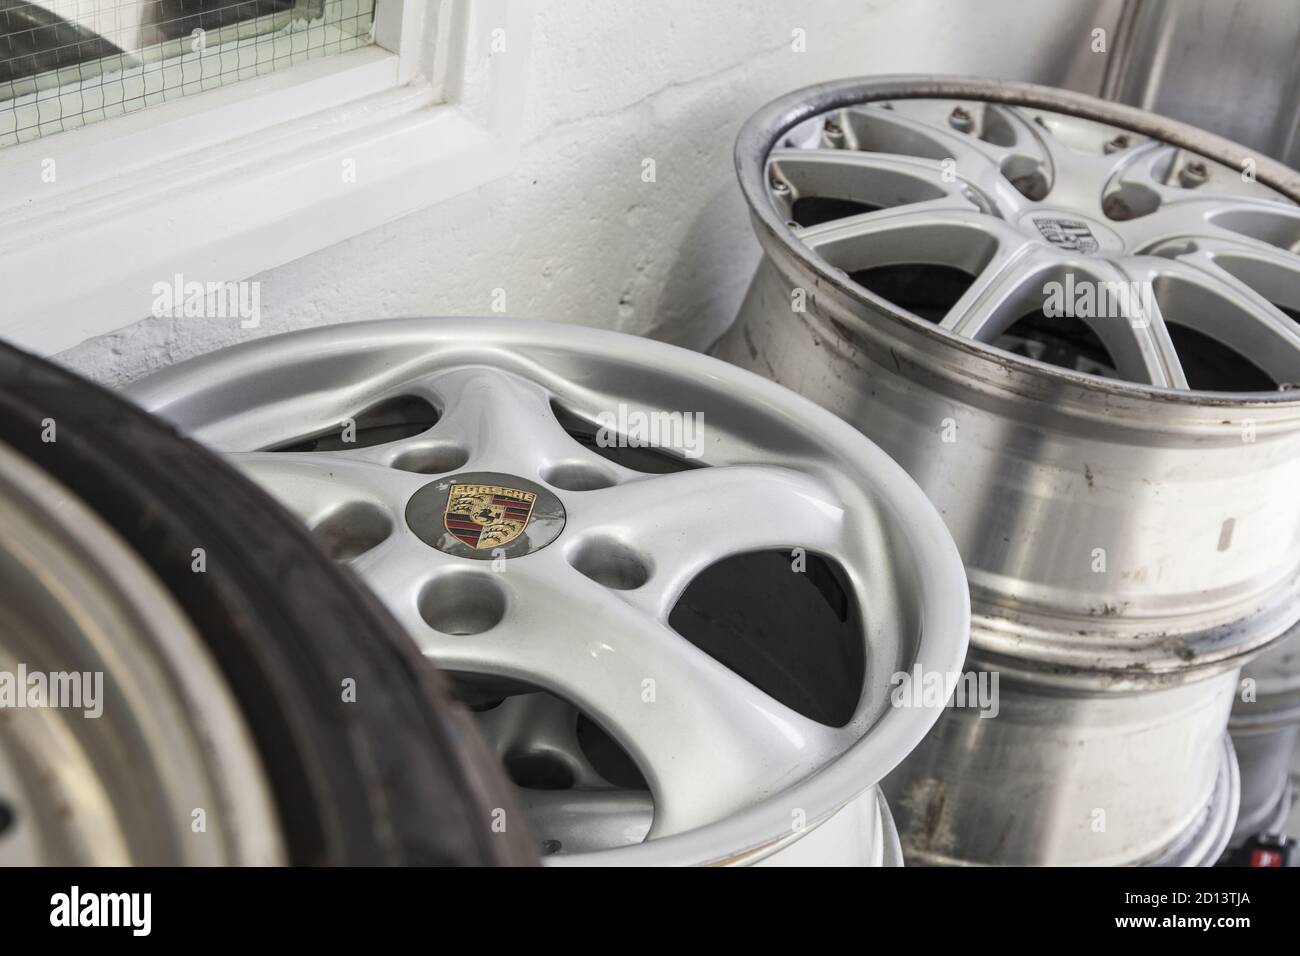 Porsche alloy wheels stacked up, UK, 2015 Stock Photo